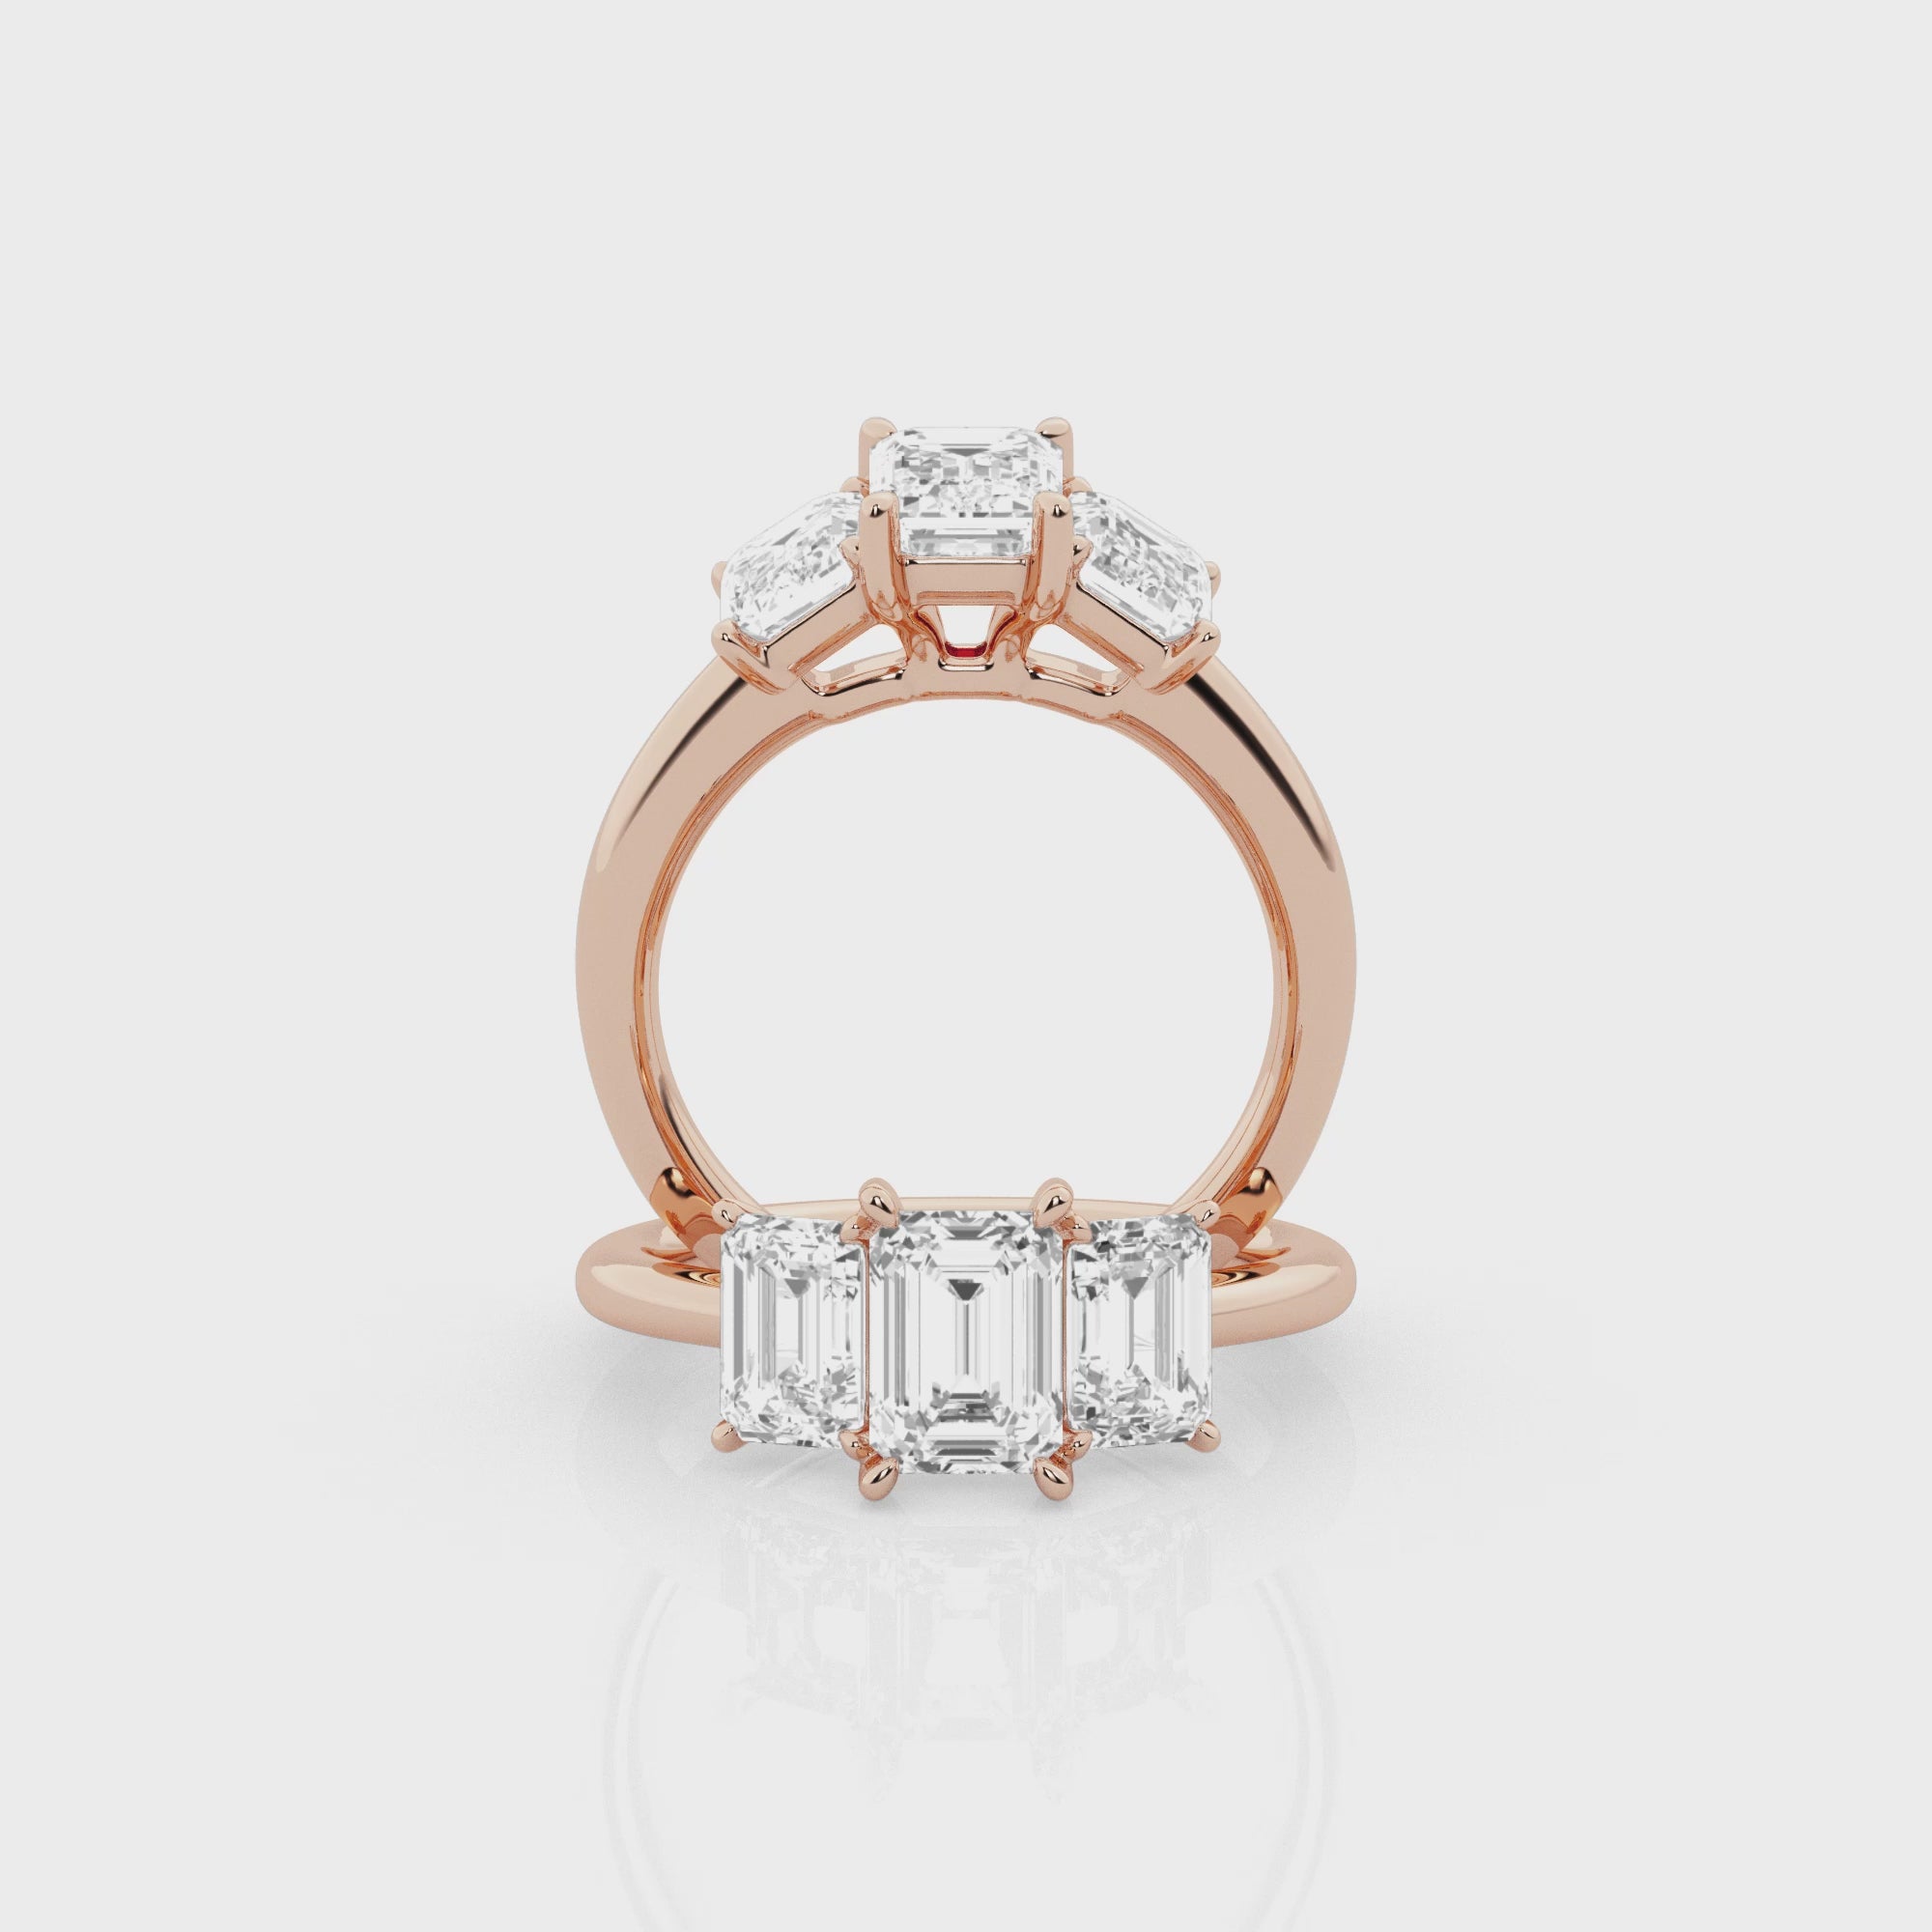 3 carat Emerald Cut Three Stone Diamond Ring